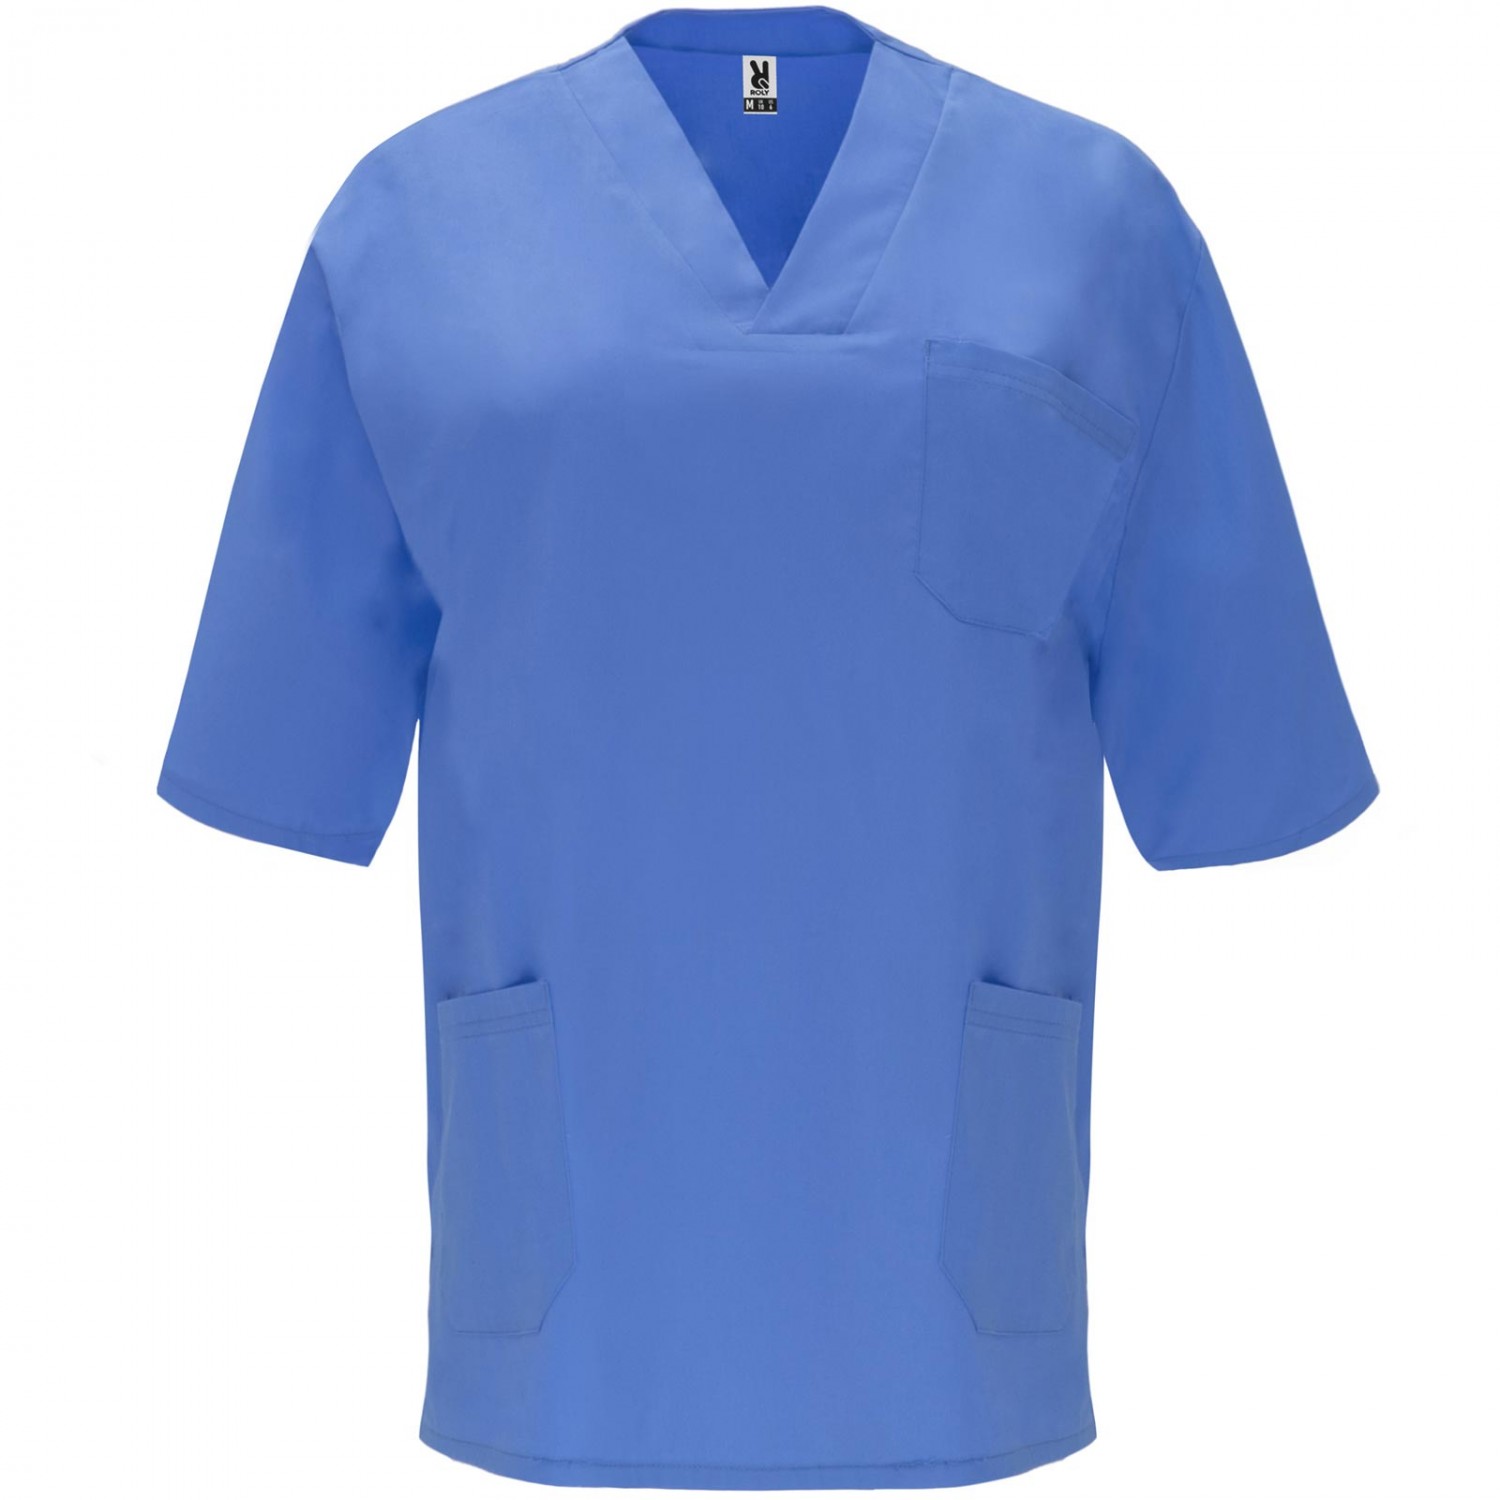 Schlupfkasack Medizin Pflege Unisex Hemd Jacke (Farbe: OP-blau Größe: XL)